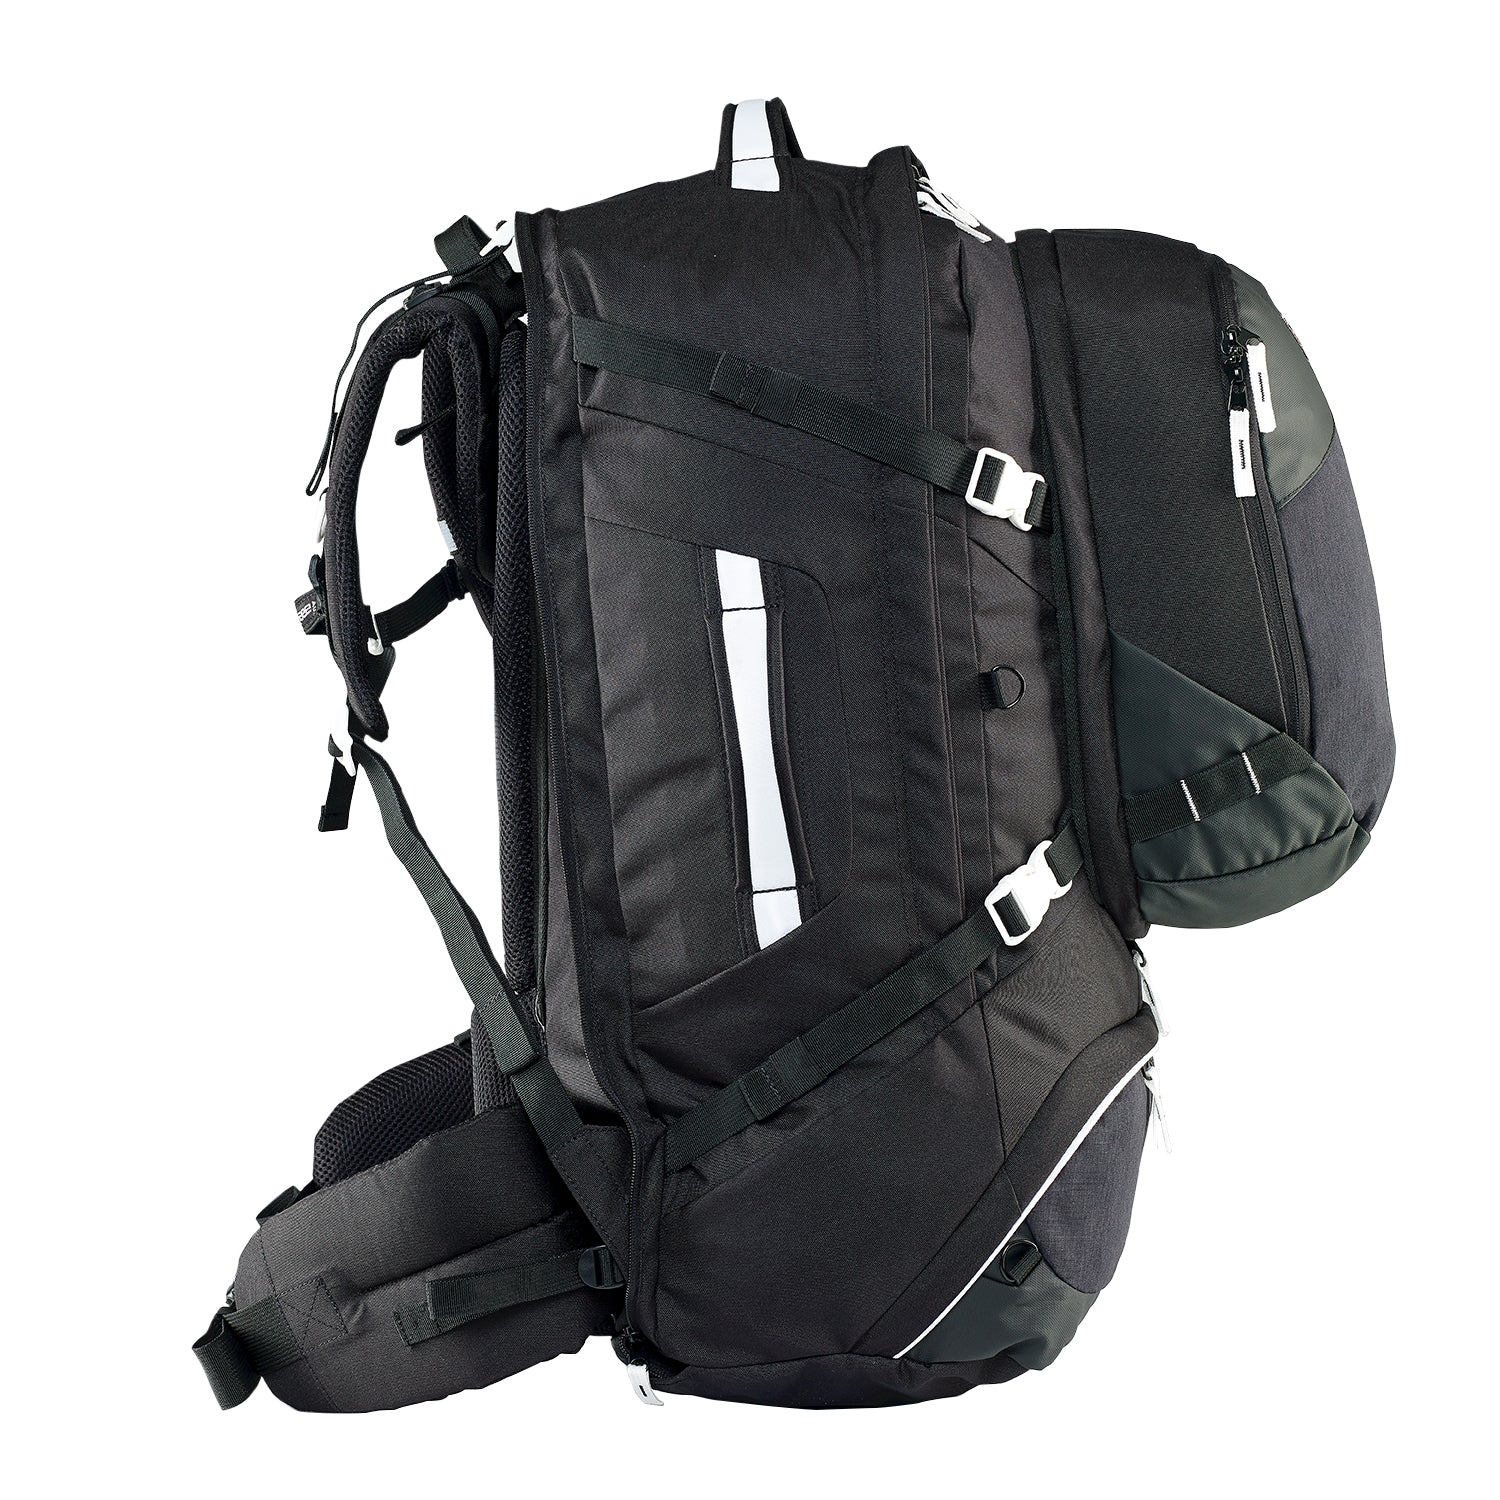 caribee journey travel backpack black 65 l